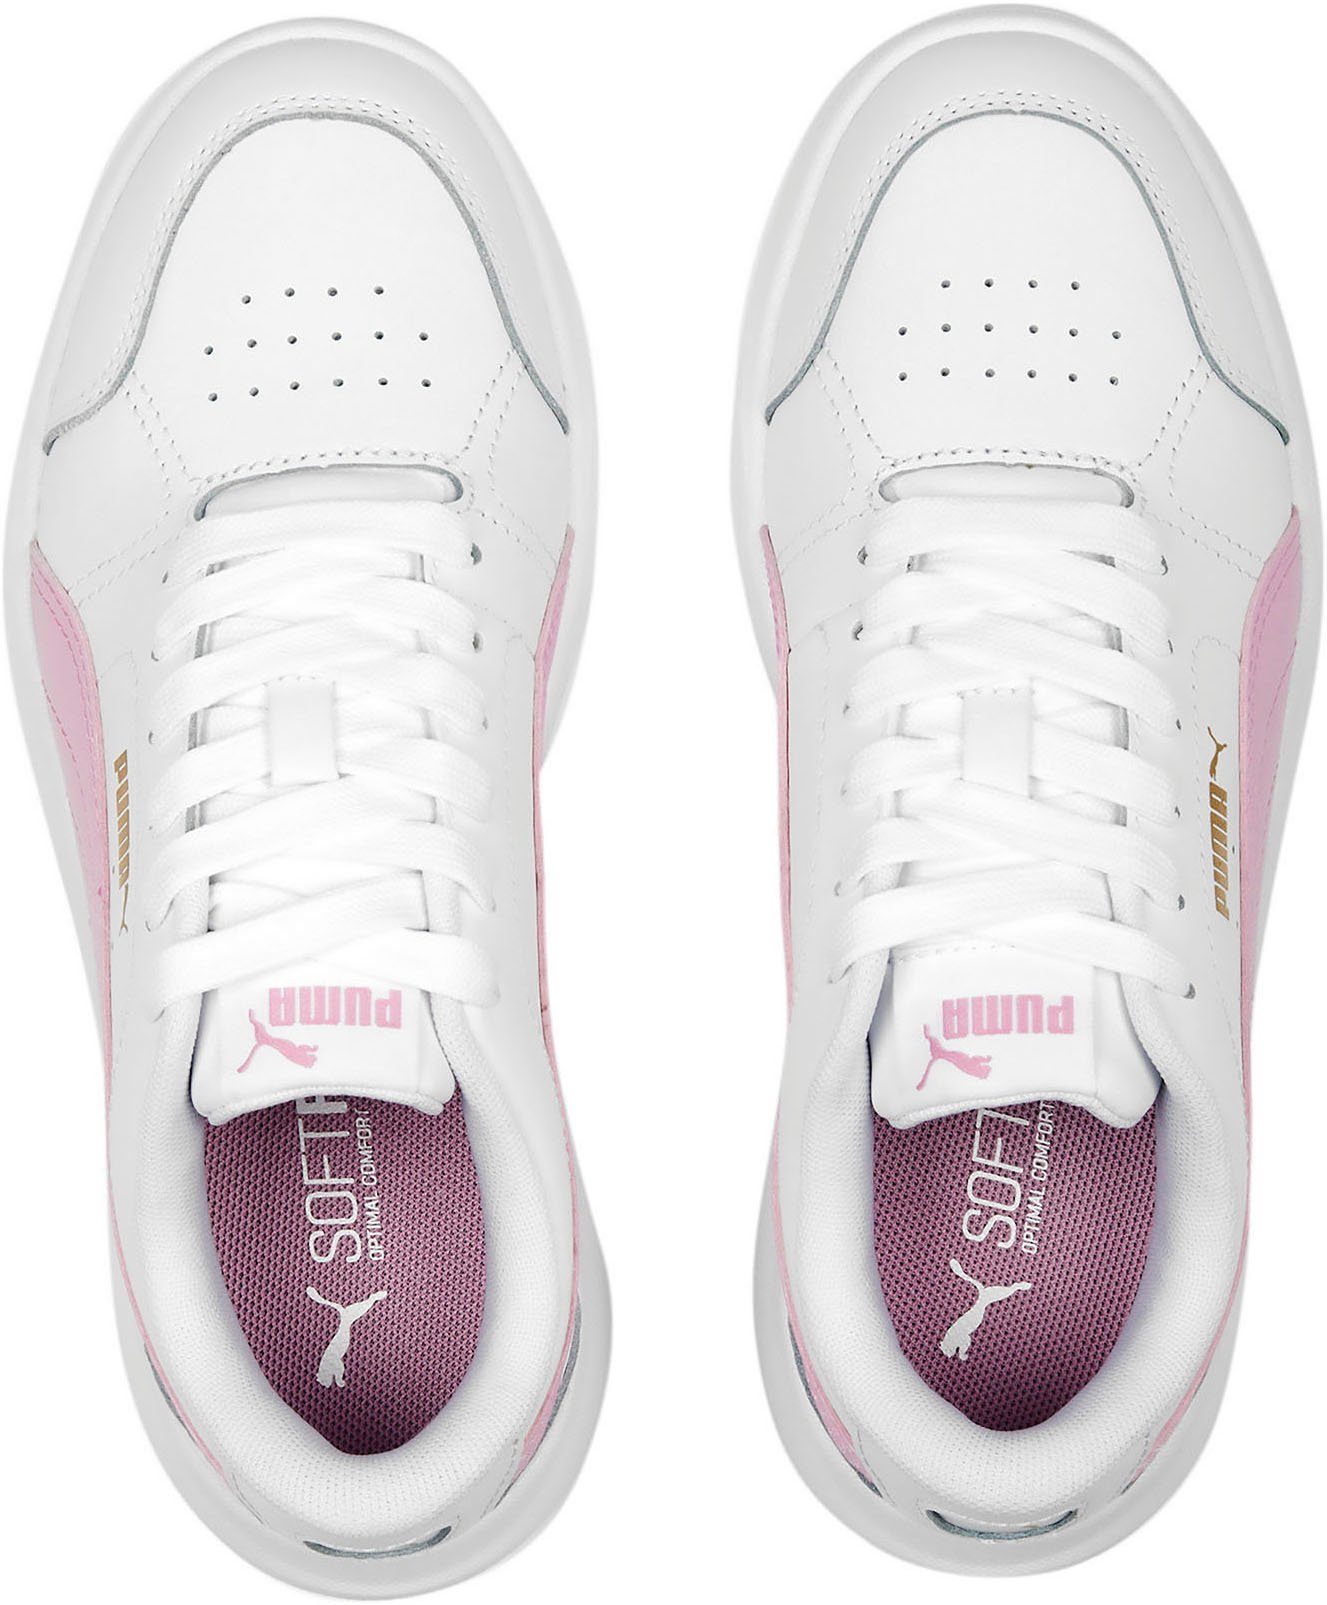 Evolve weiß-rosa Sneaker Jr PUMA Court Puma